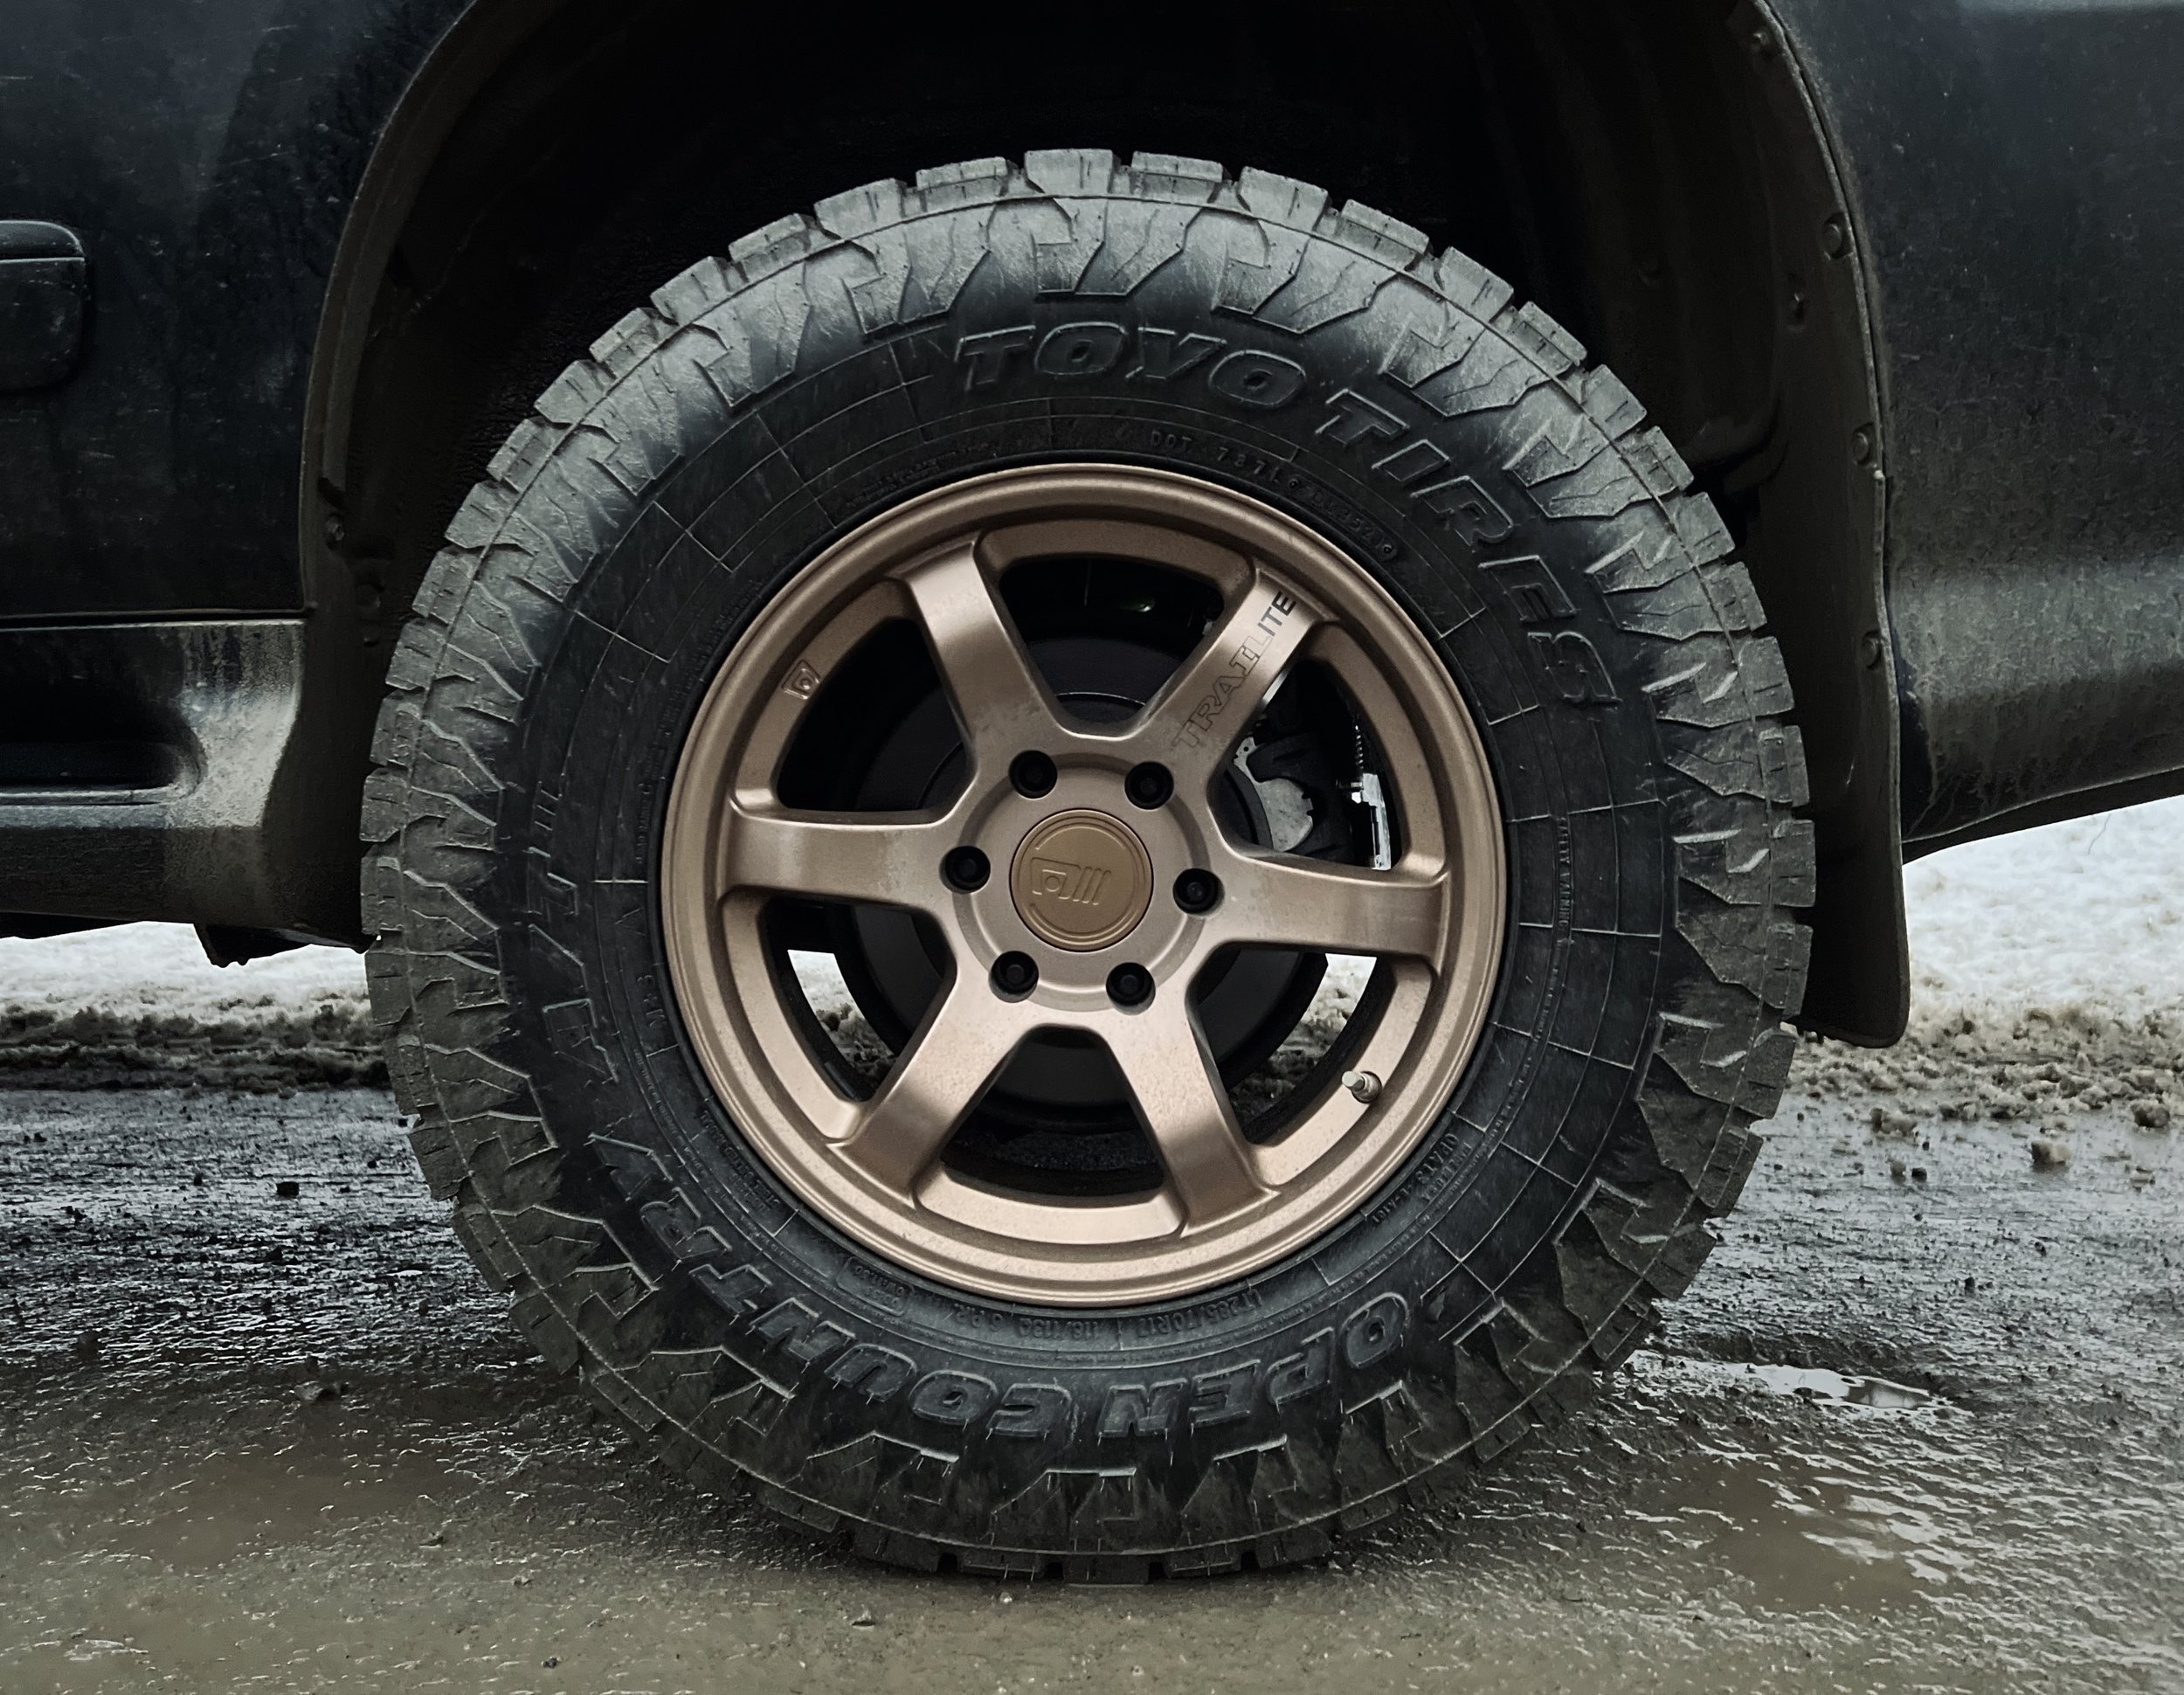 Toyo Open Country AT3 all-terrain tires on Motegi Trailite wheels